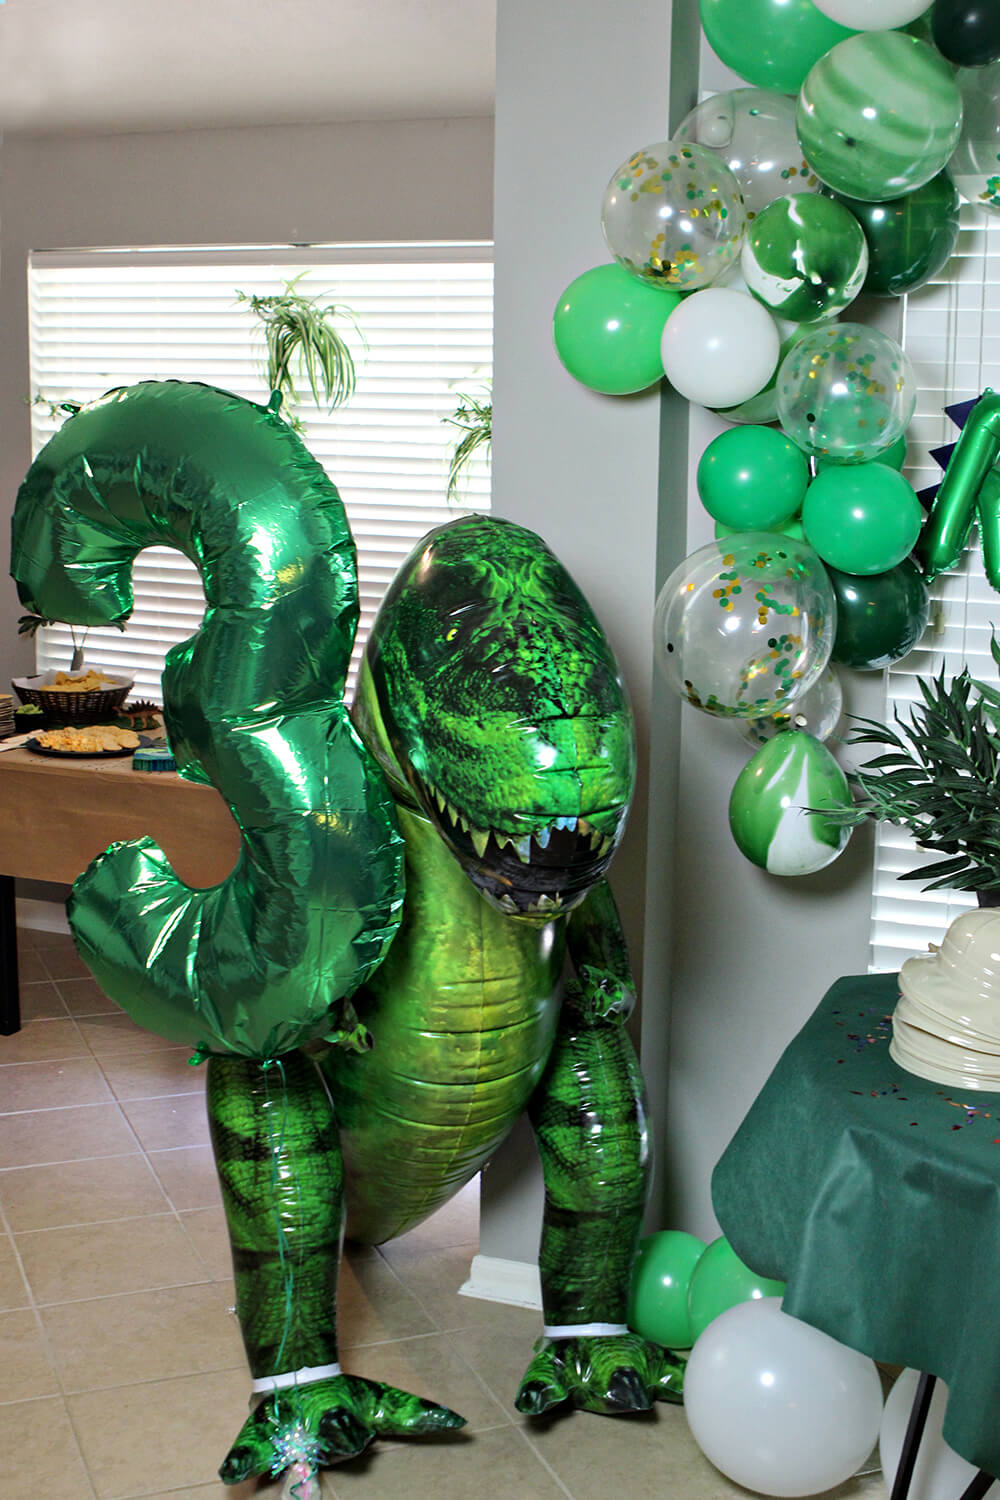 Three Rex Dinosaur Party Decor - Giant Inflatable T-Rex